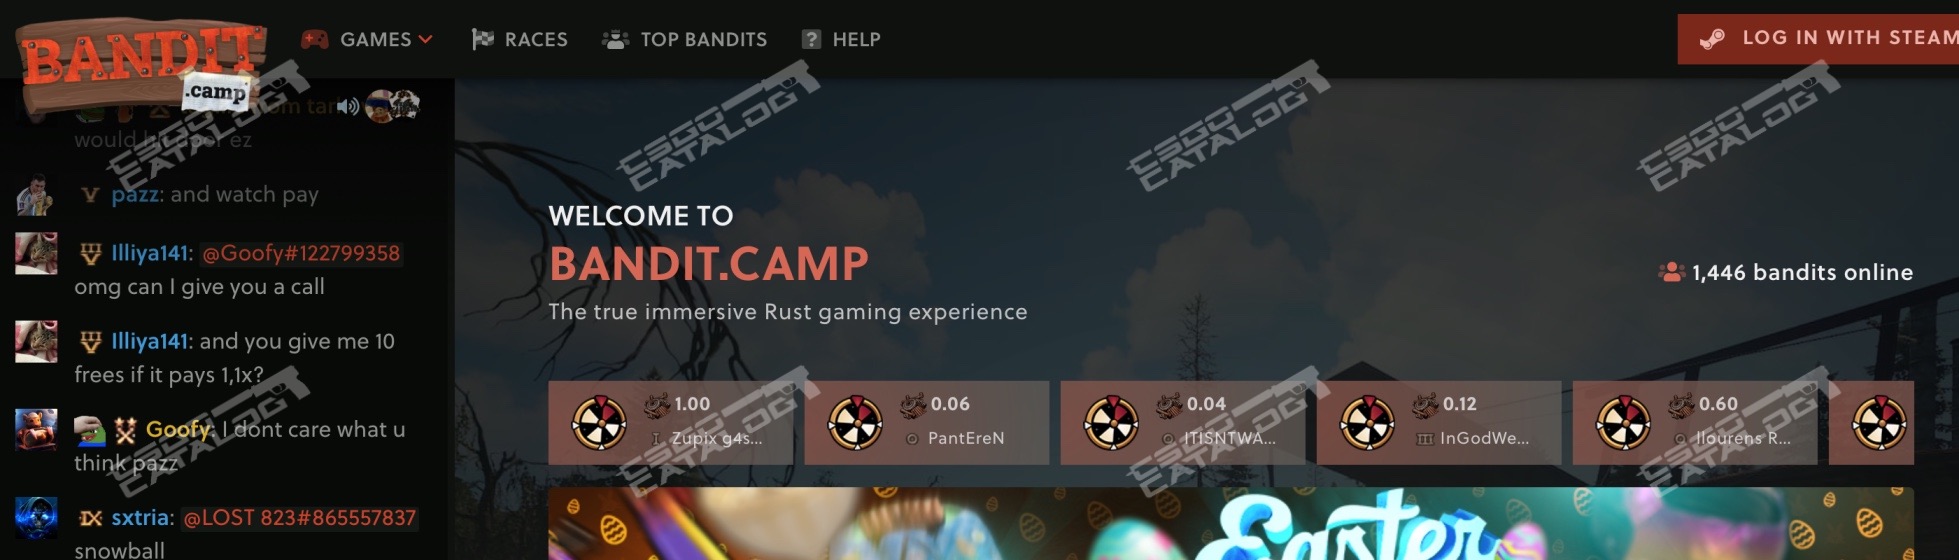 bandit.camp recension